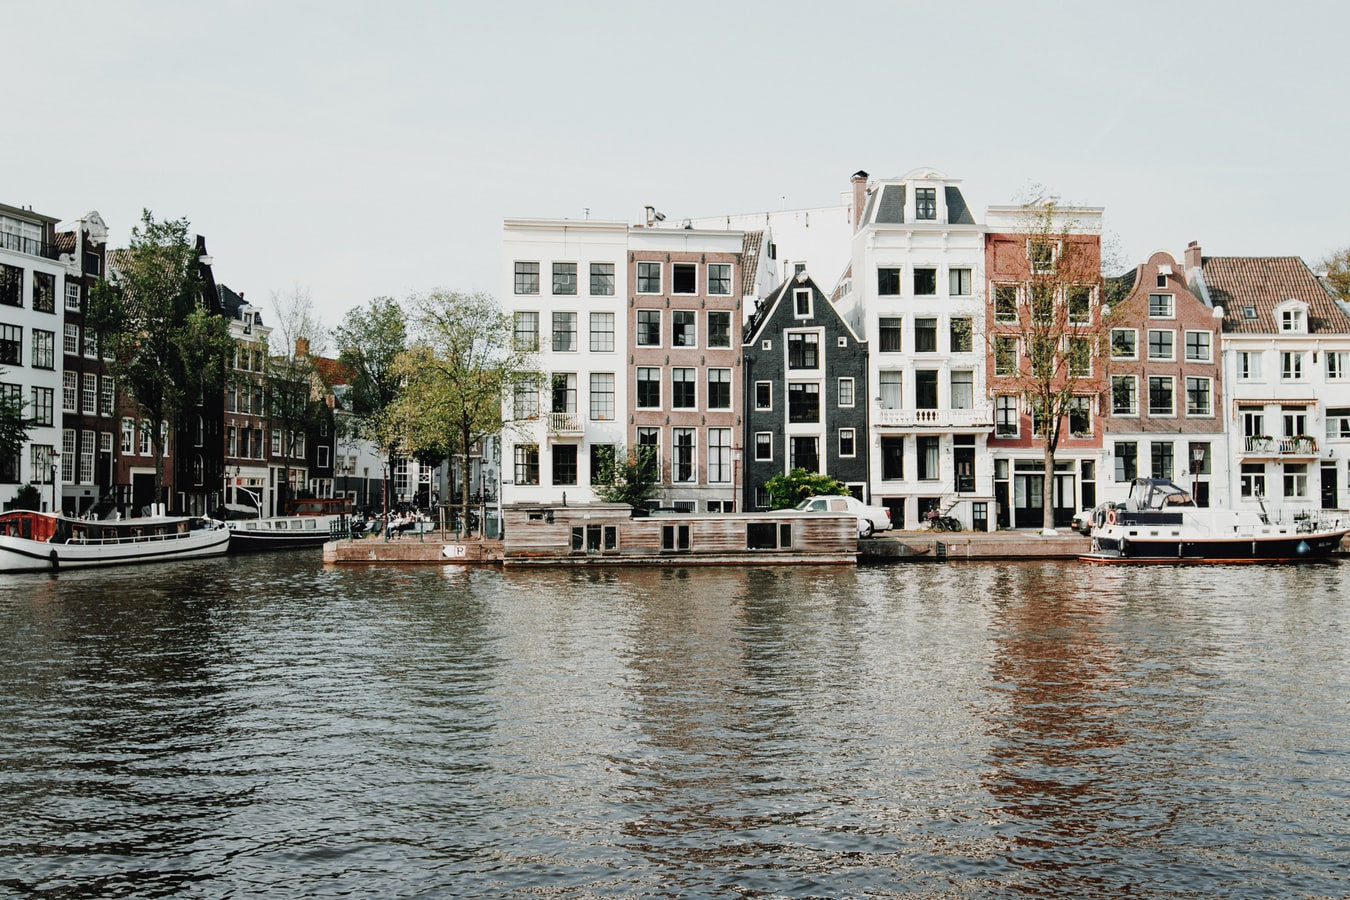 When in Amsterdam…